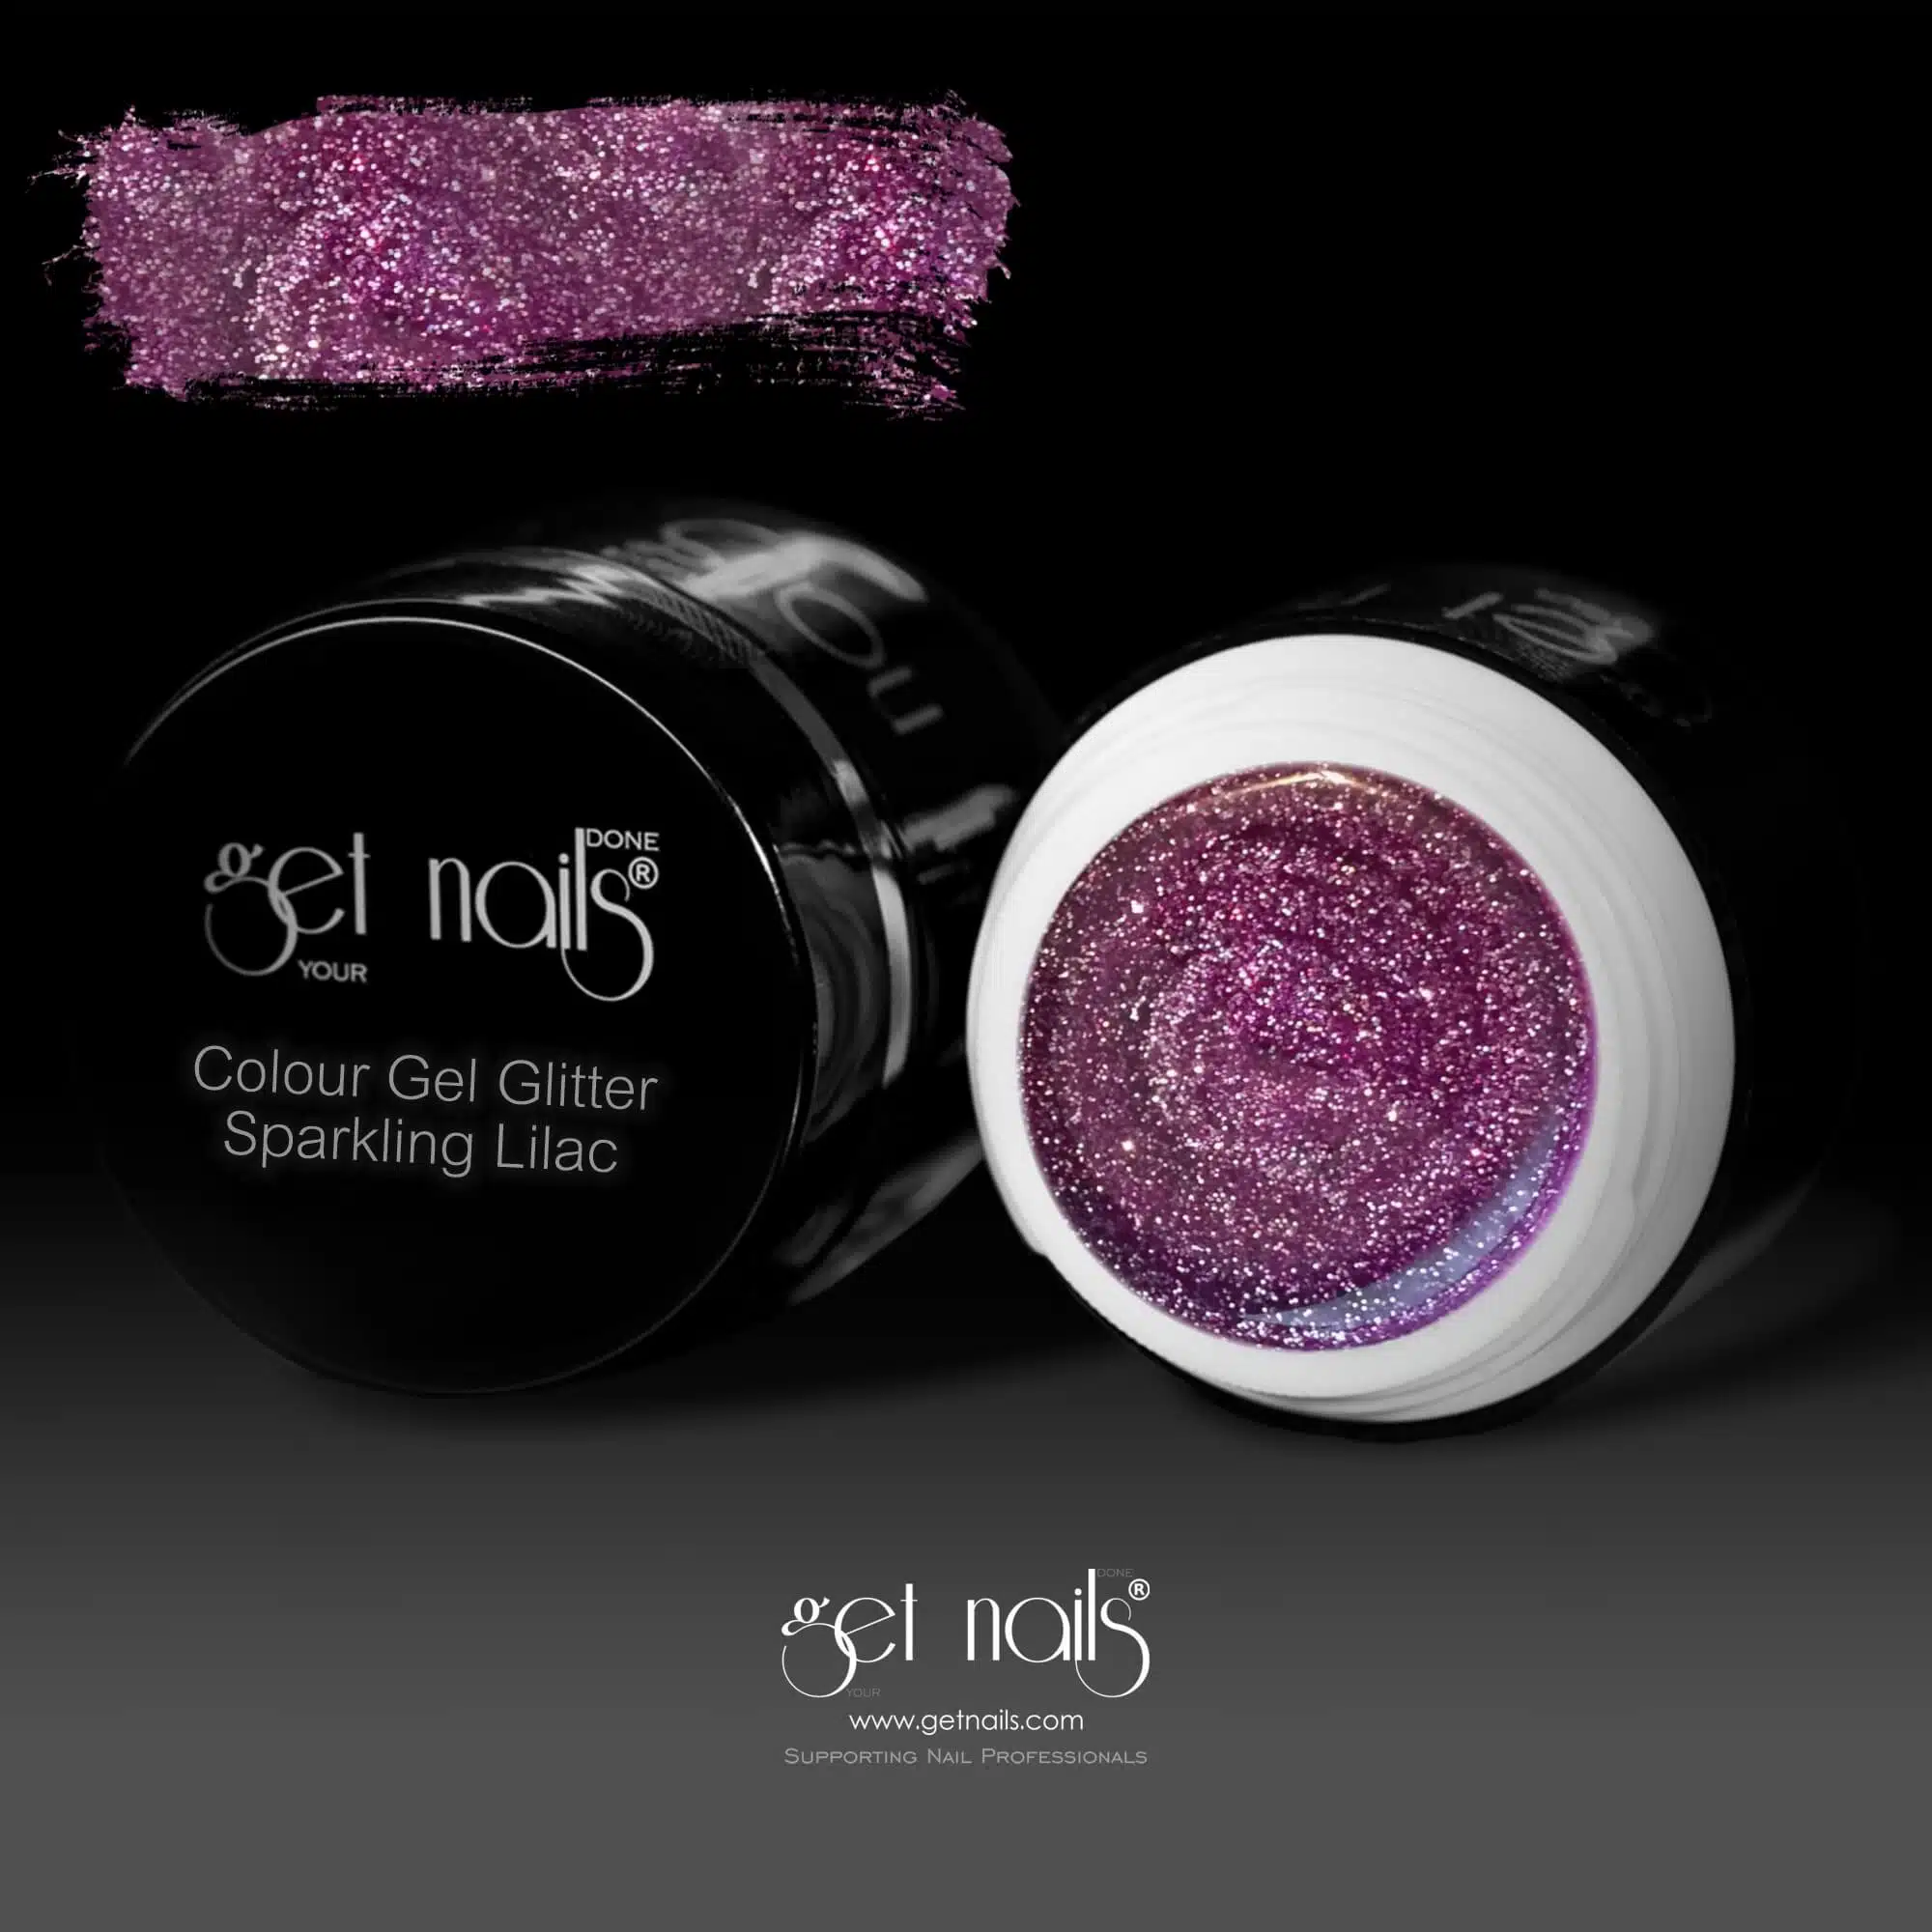 Get Nails Austria - Color Gel Glitter Sparkling Lilac 5g